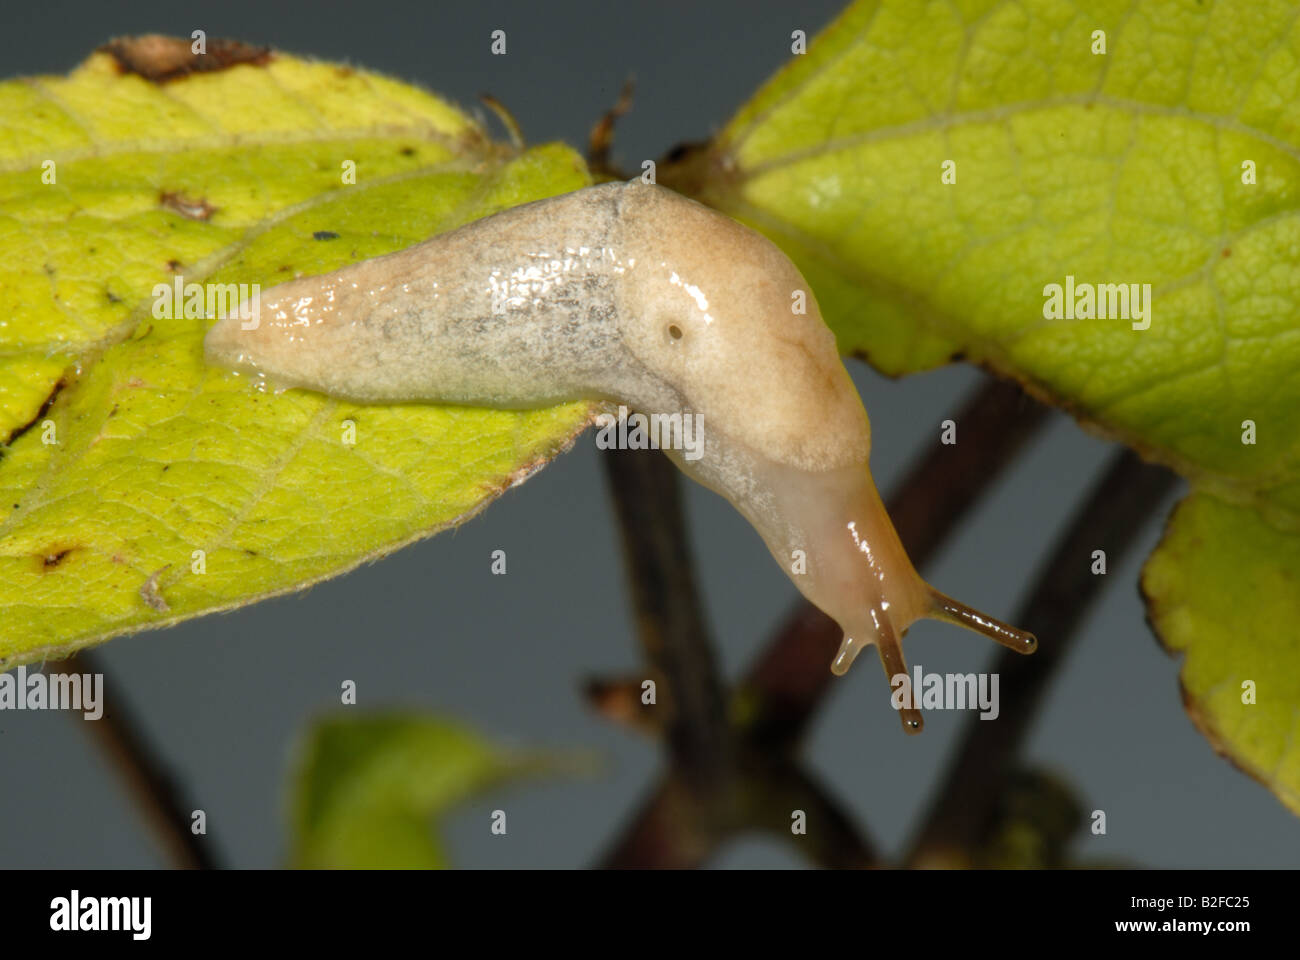 A pale slightly marked variation of the grey field slug Deroceras reticulatum on runner bean leaf Stock Photo